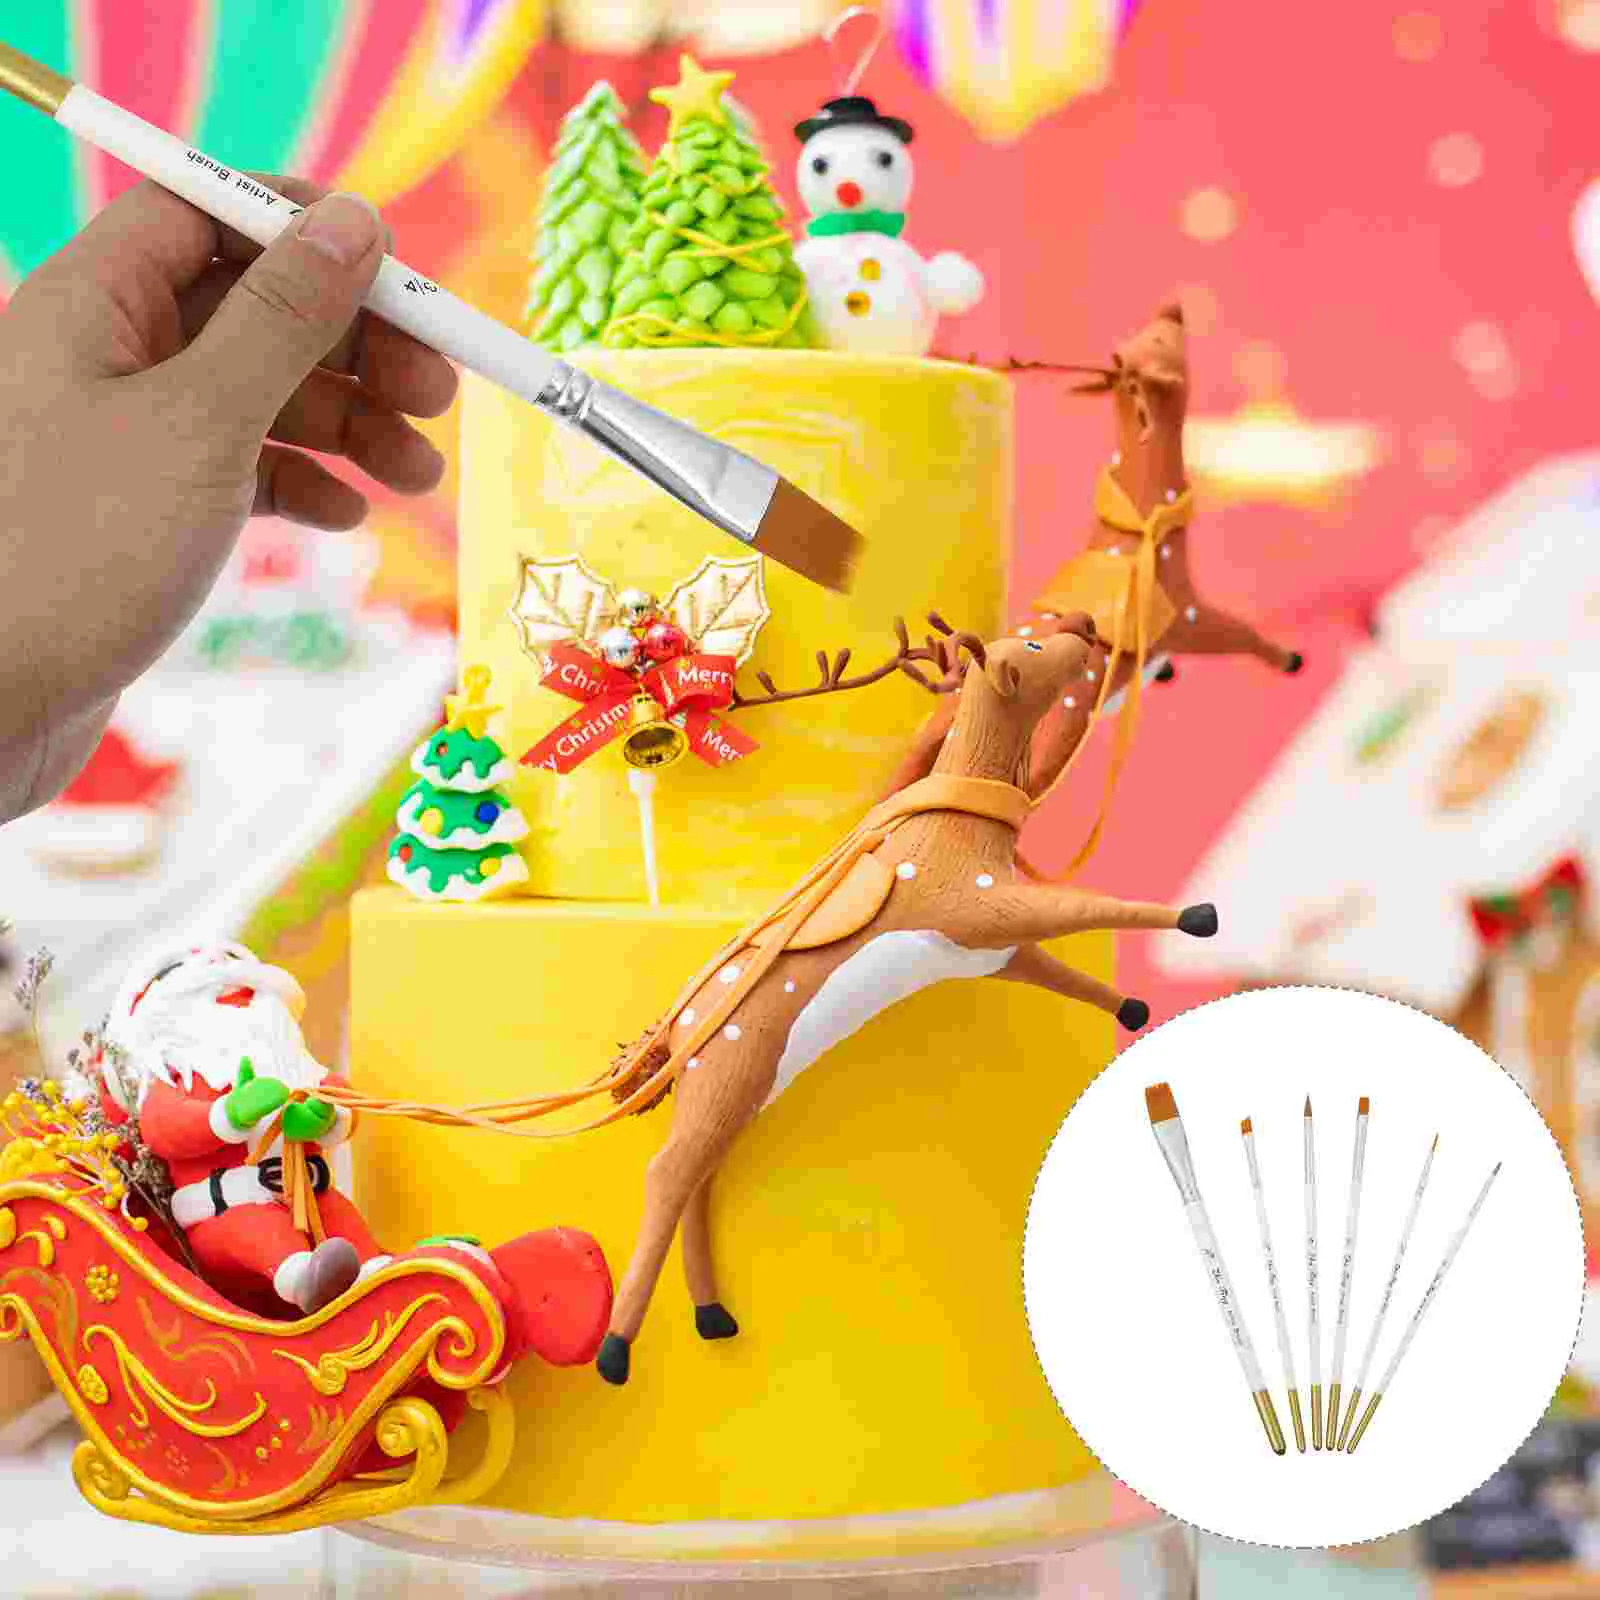 

Decorating Cake Tools Brush Fondant Cookie Detail Fine Painting Chocolate Set Tool Brushes Sugar Diy Gum Sculpting Candy